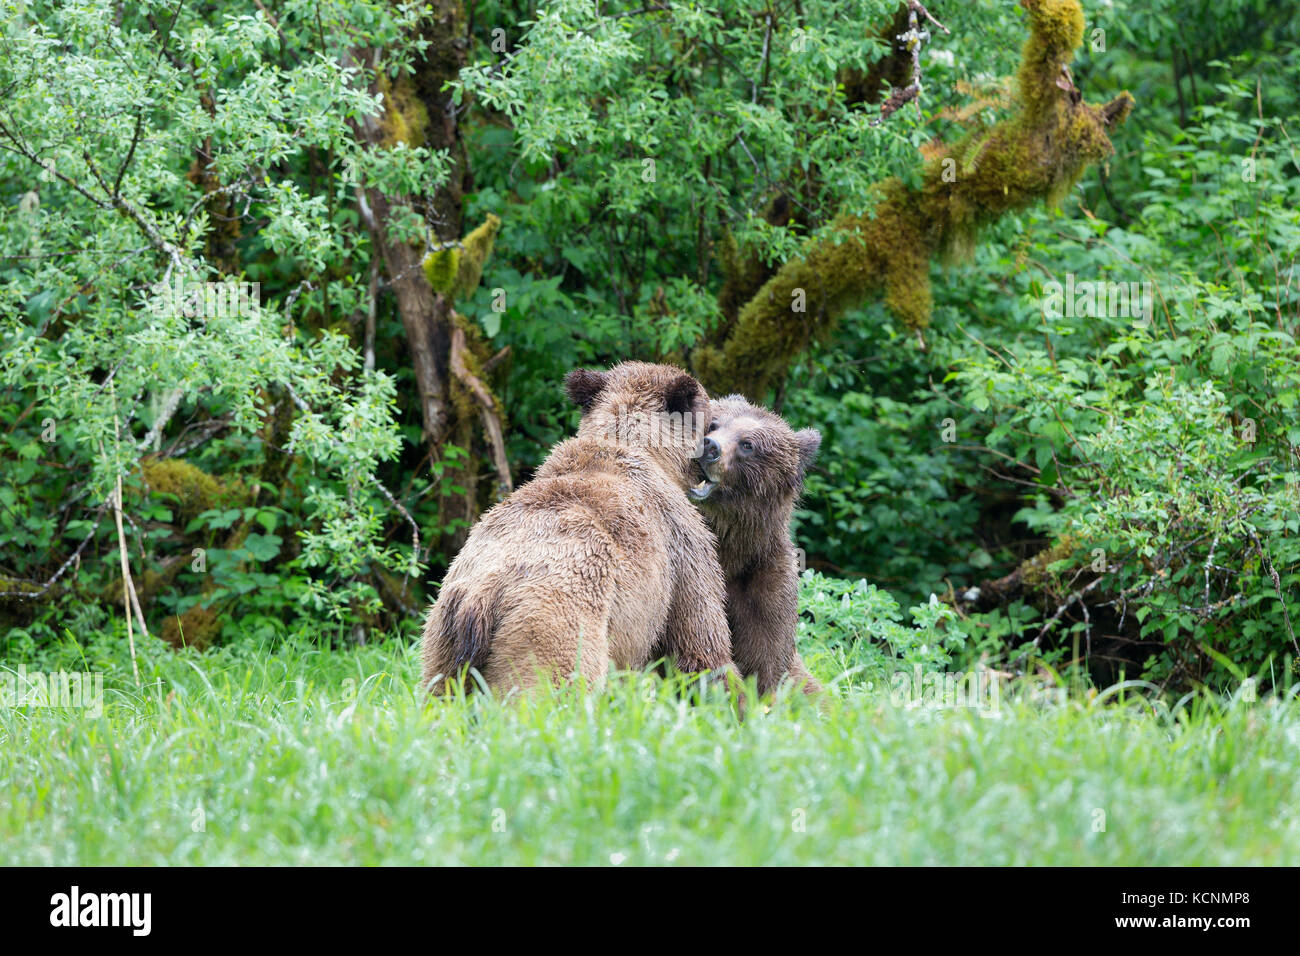 Orso grizzly (Ursus arctos horribilis), giovane maschio (sinistra) e femmina il corteggiamento, khutzeymateen ingresso, khutzeymateen orso grizzly santuario, British Columbia, Canada. Foto Stock